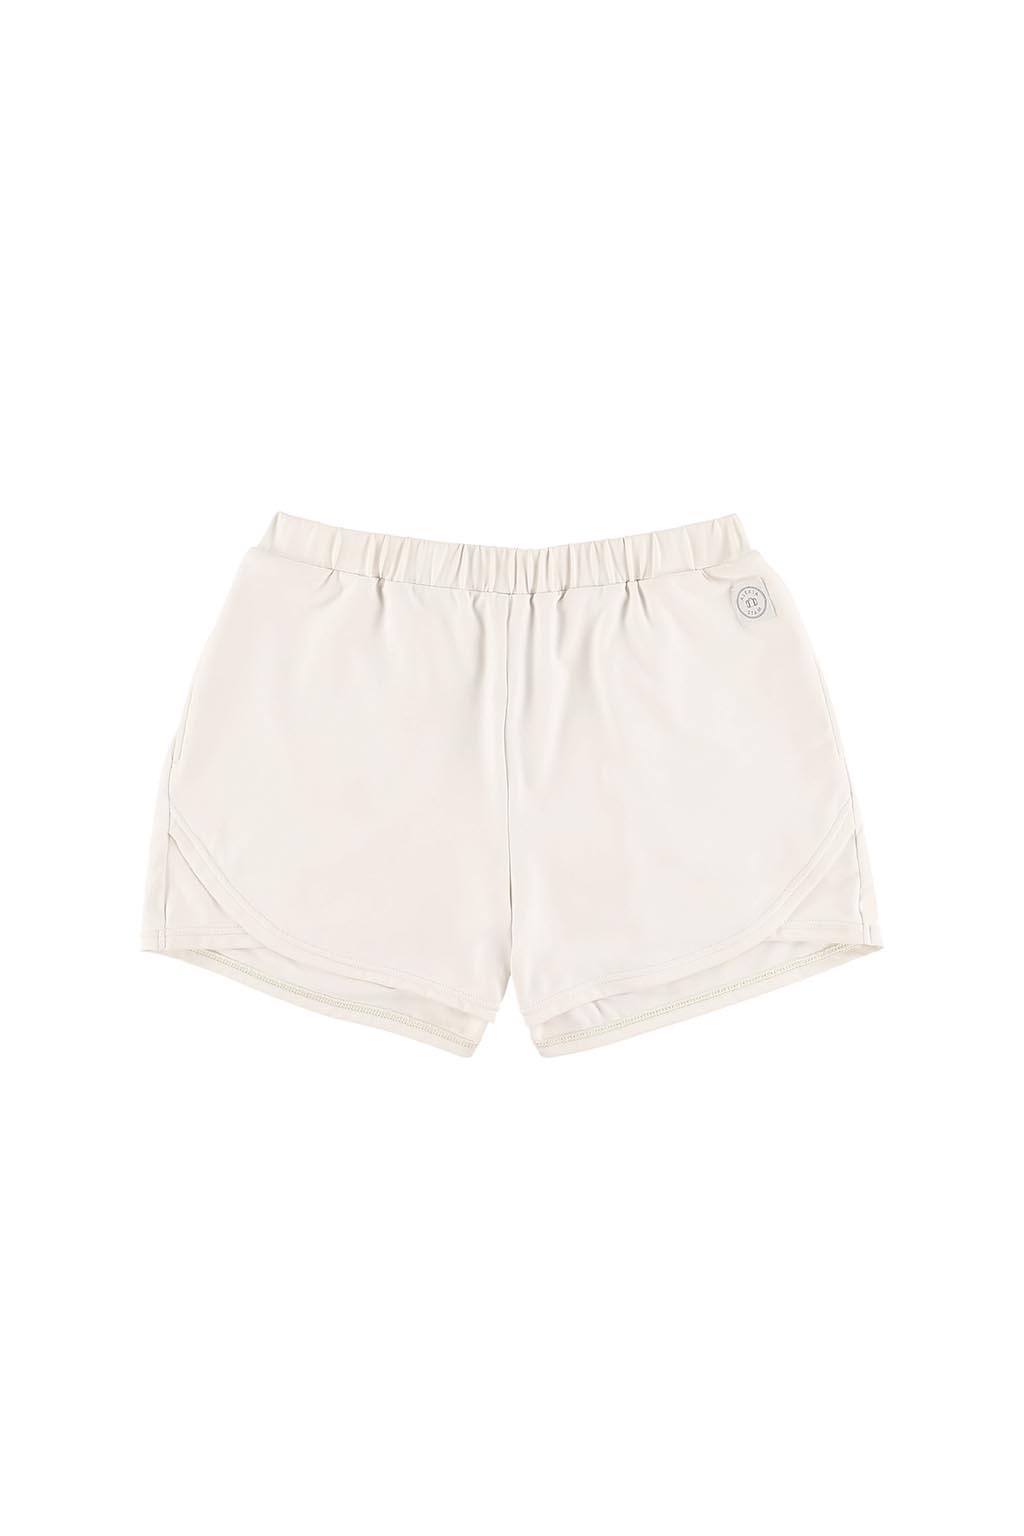 Swim Shorts Cotton 2